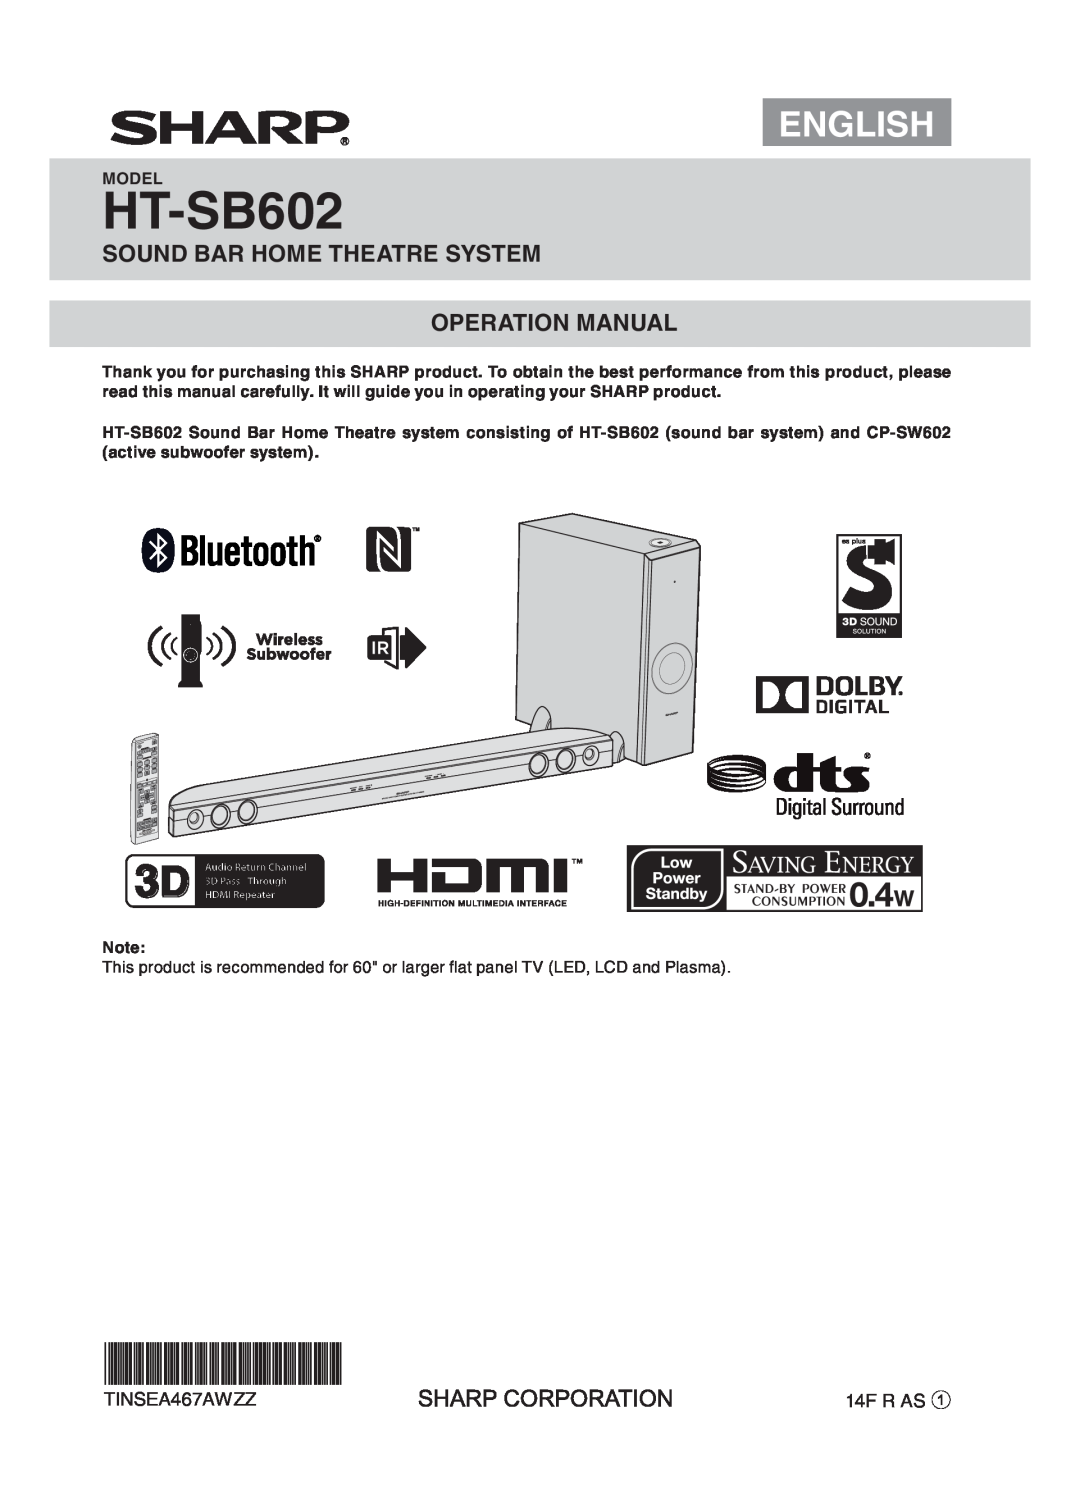 Sharp HT-SB602 operation manual English, TINSEA467AWZZ, 14F R AS 